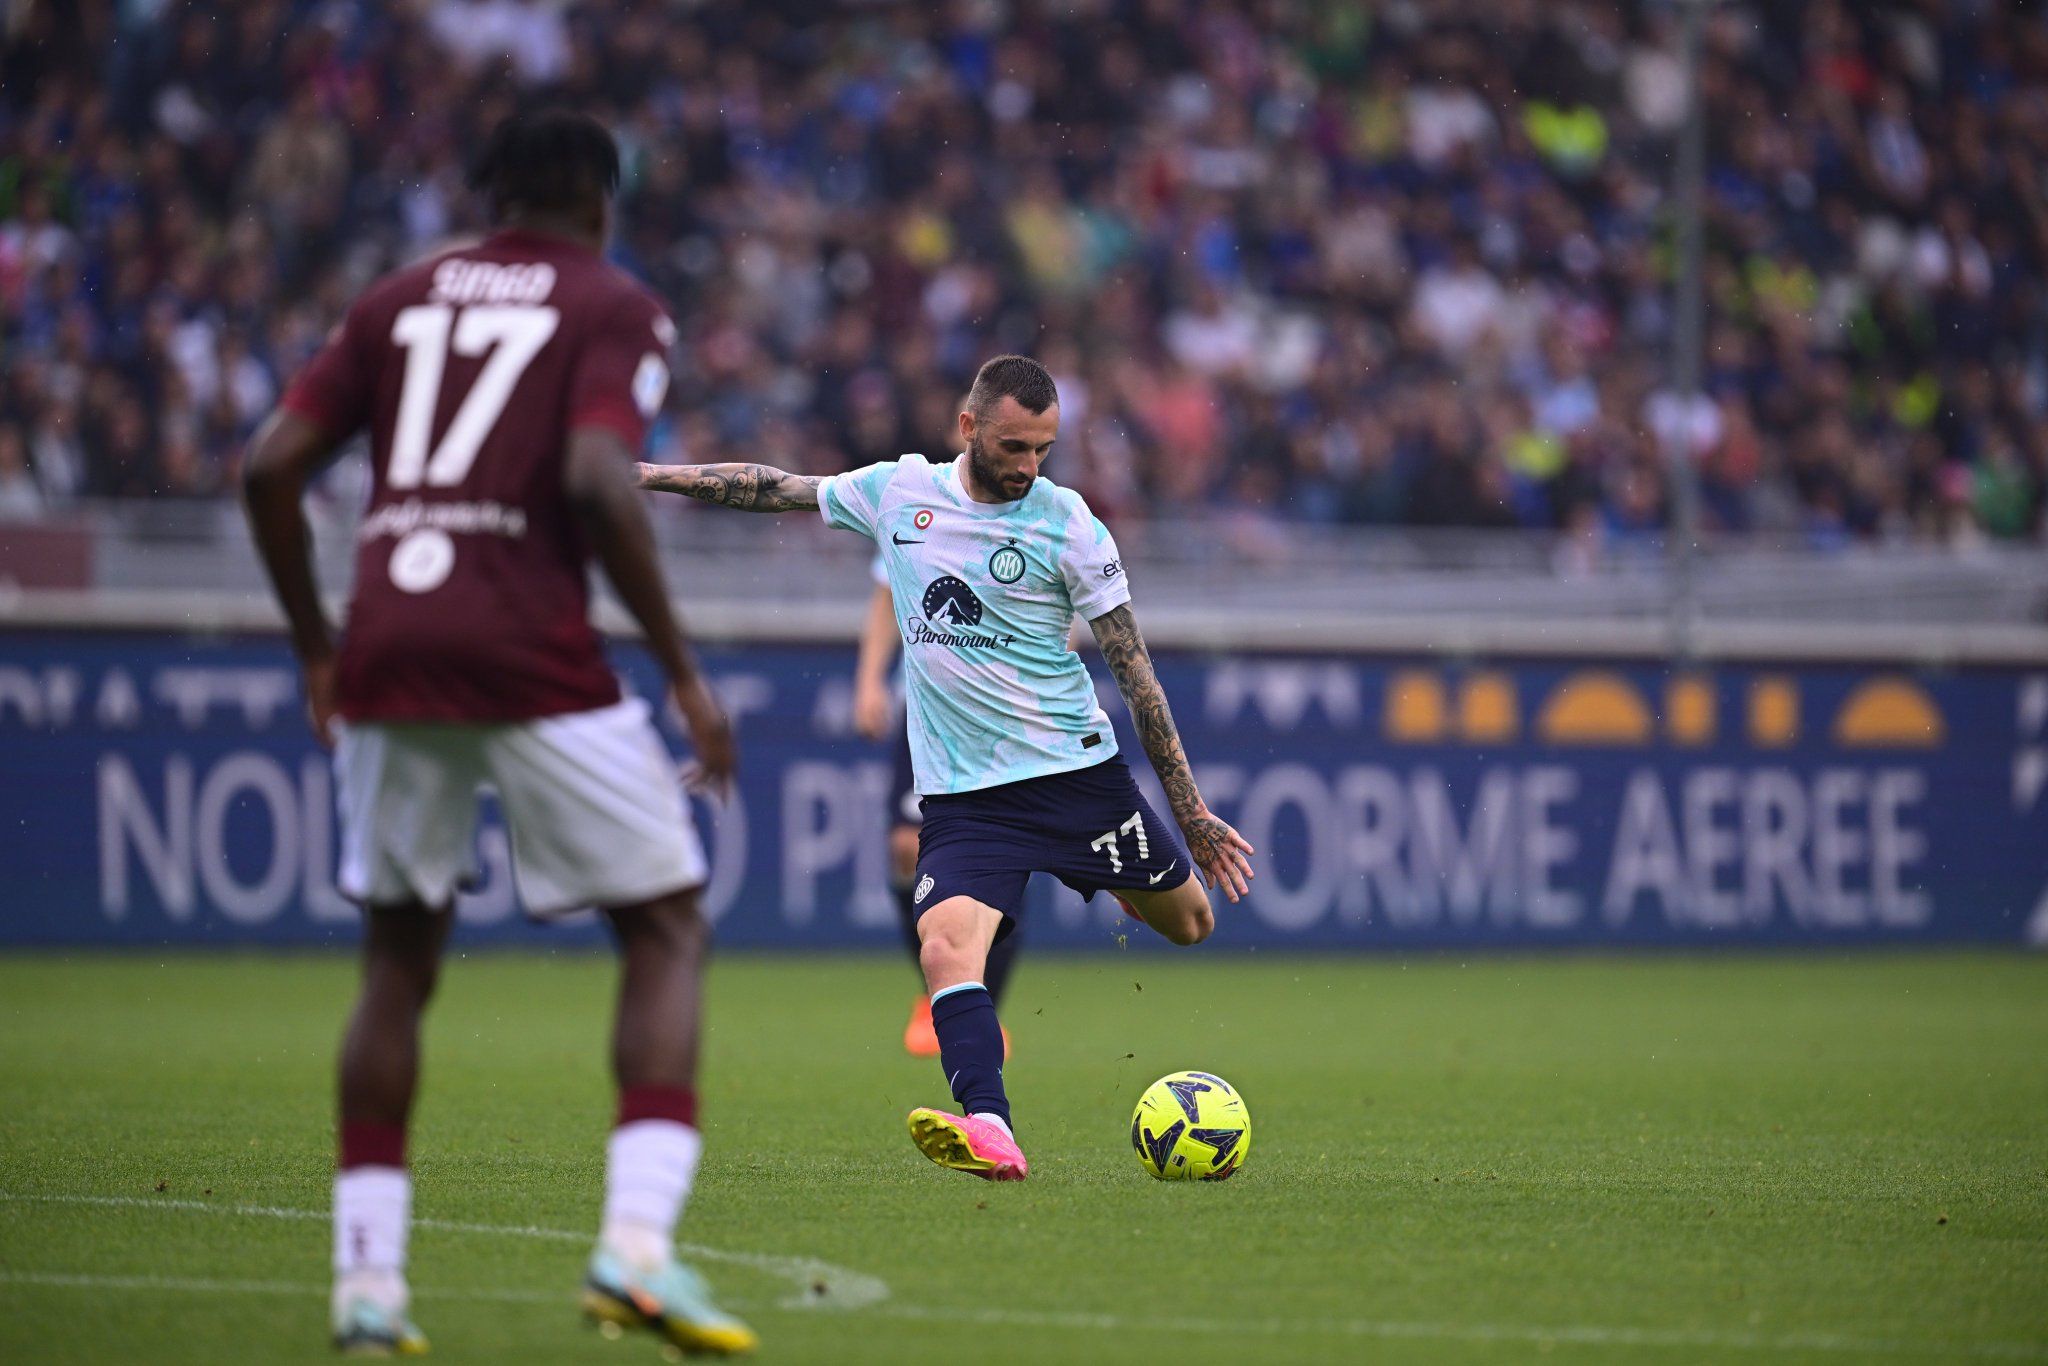 Gelandang Inter Milan, Marcelo Brozovic (kanan) melesakkan tendangan saat melawan Torino di Serie-A akhir pekan lalu. Logo Paramount+ sudah terpampang di jersey Inter.